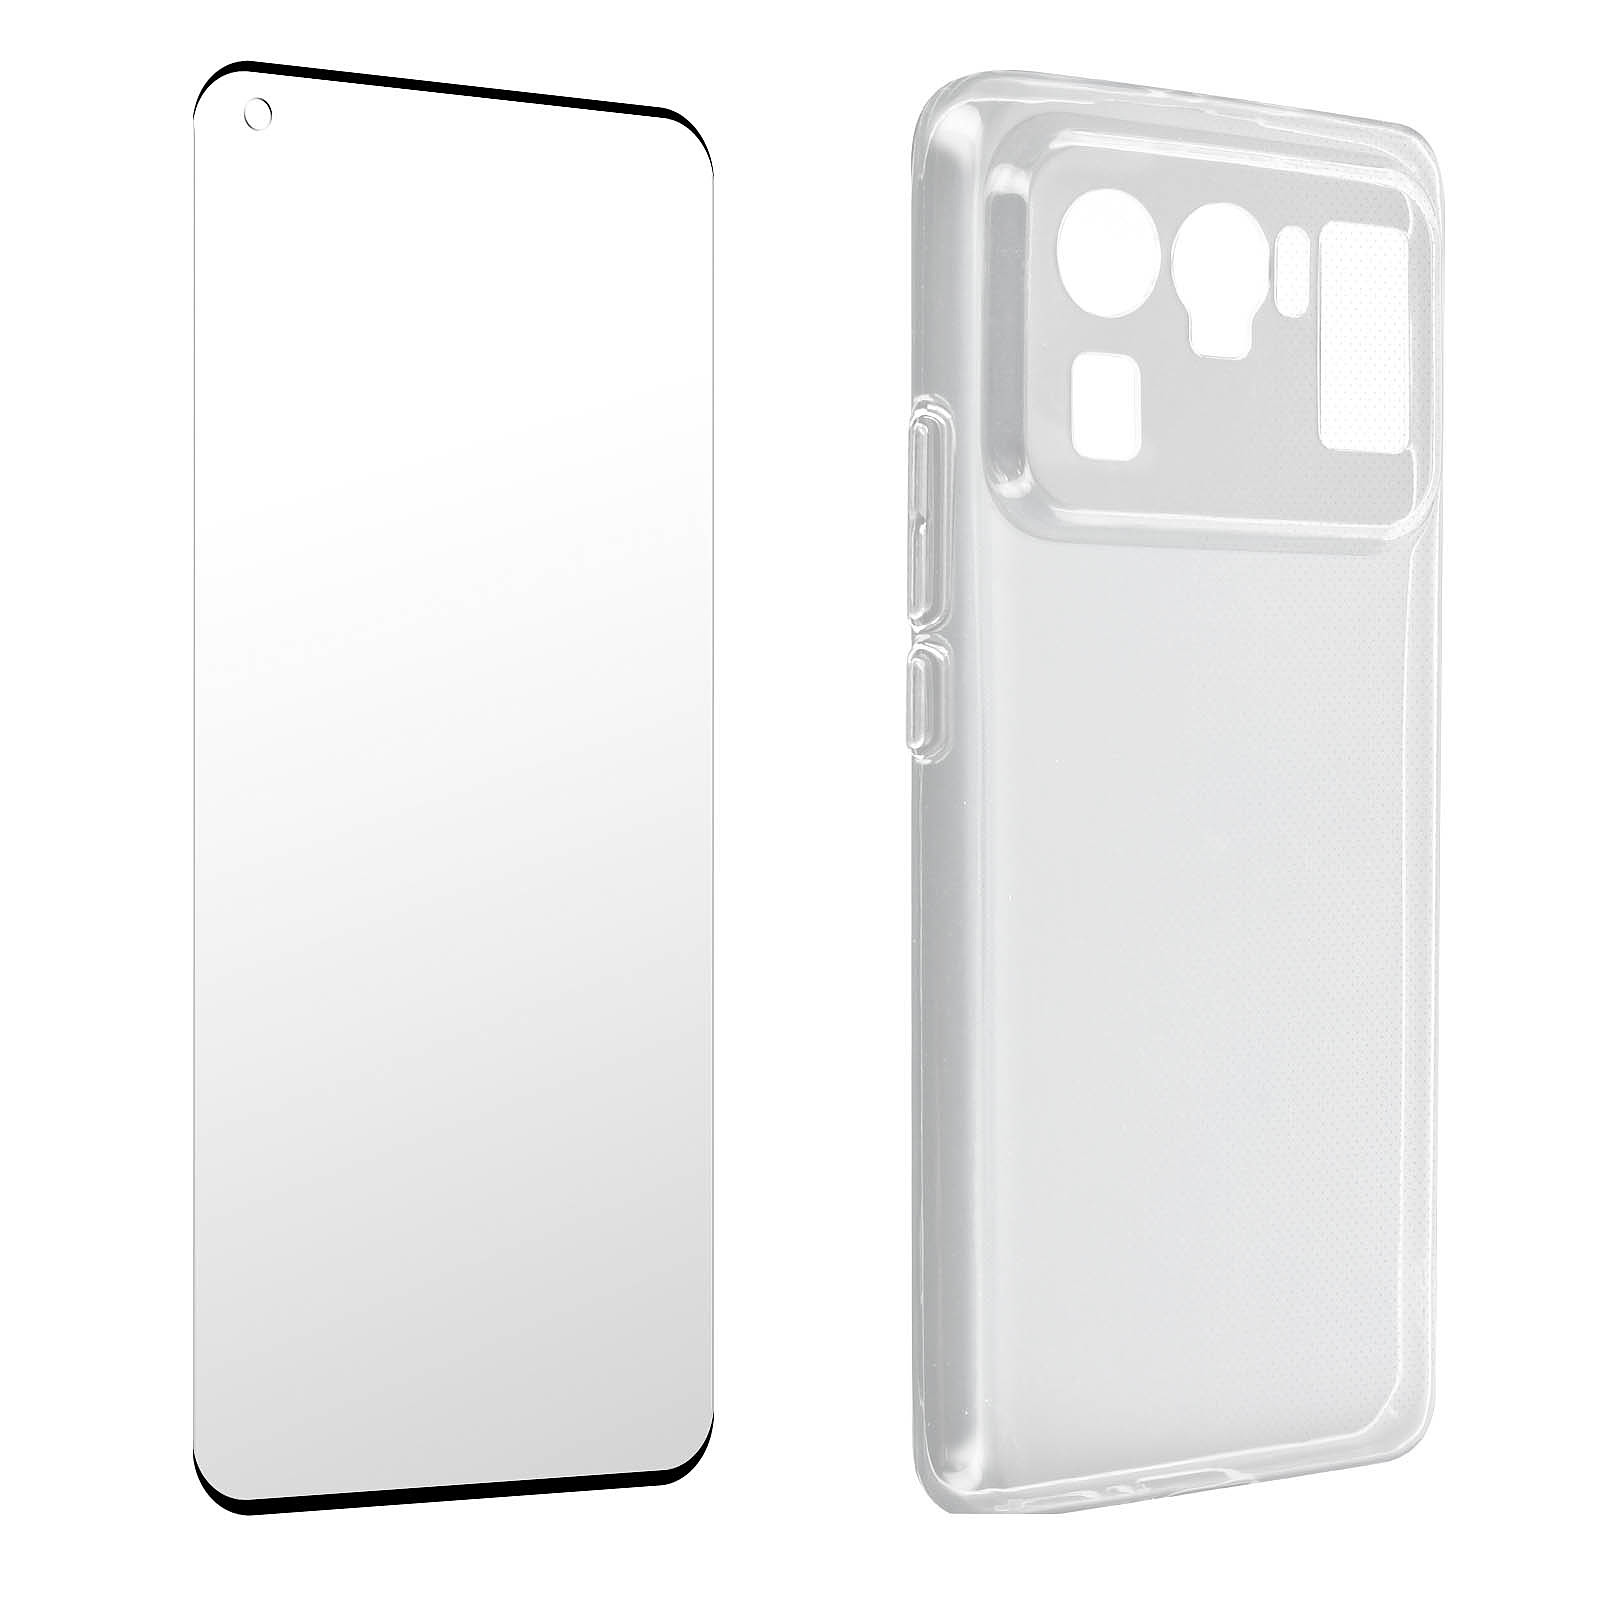 Avizar Coque pour Xiaomi Mi 11 Ultra Souple et Film Verre Trempe Durete 9H Transparent Noir - Coque telephone Avizar